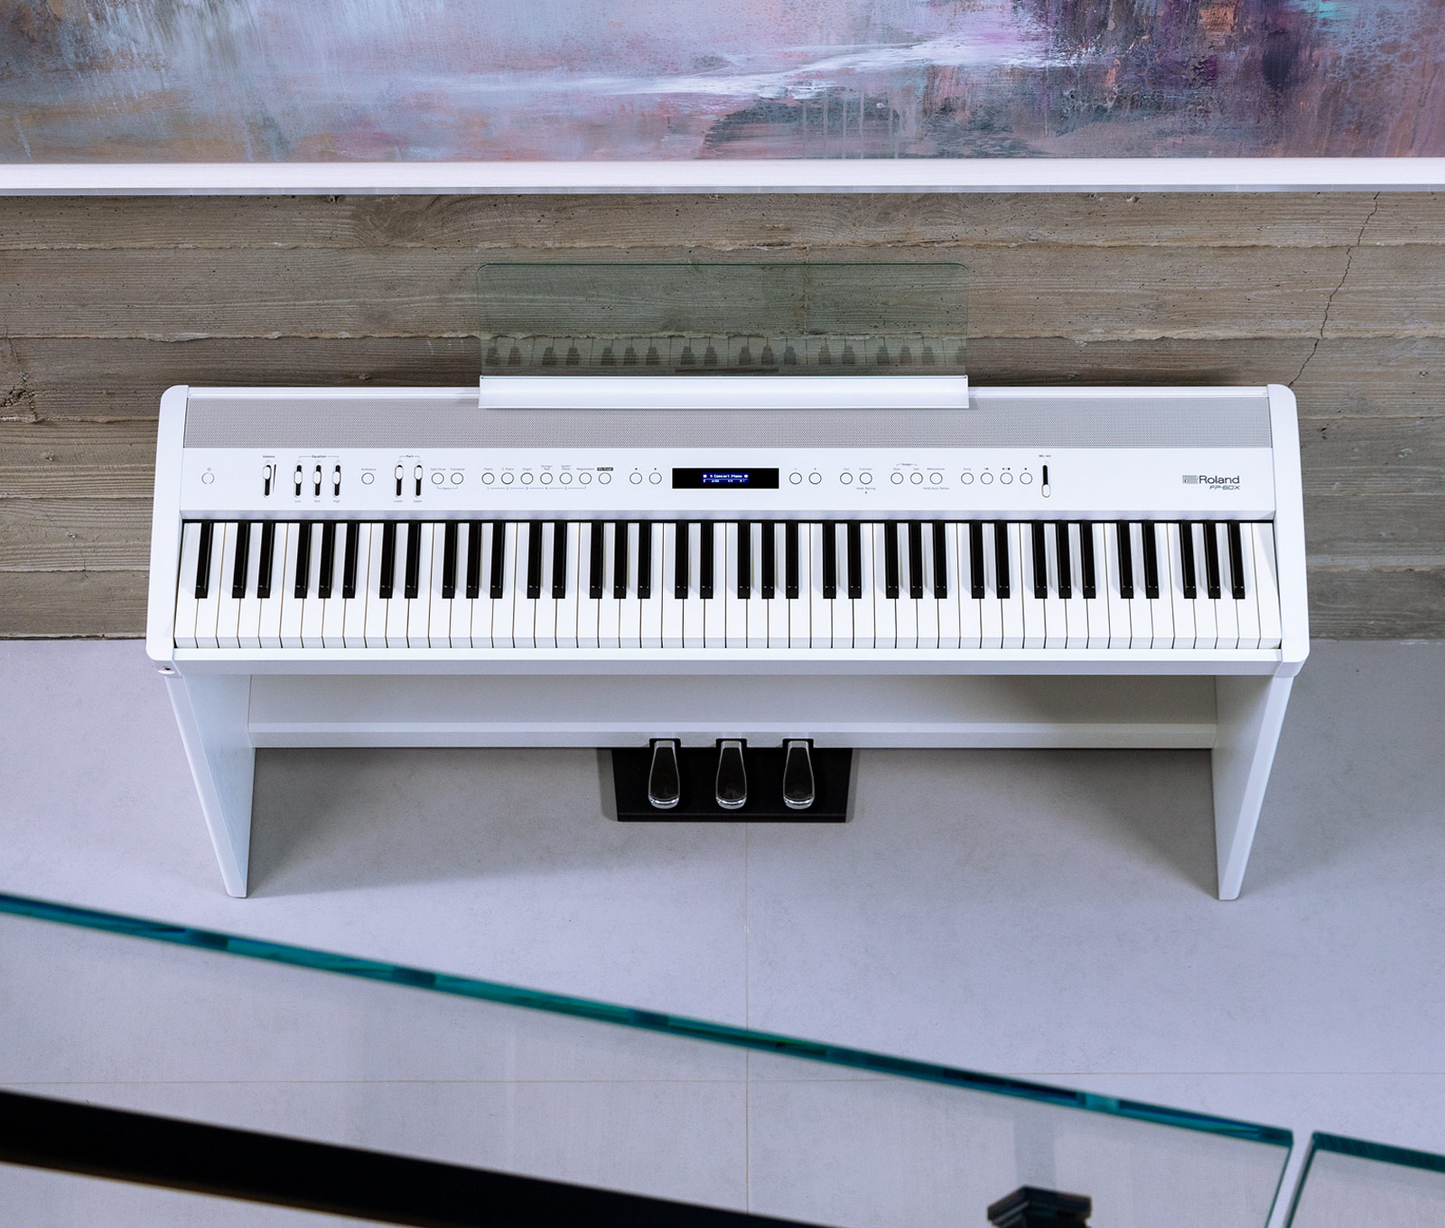 Piano Digital FP-60X Roland